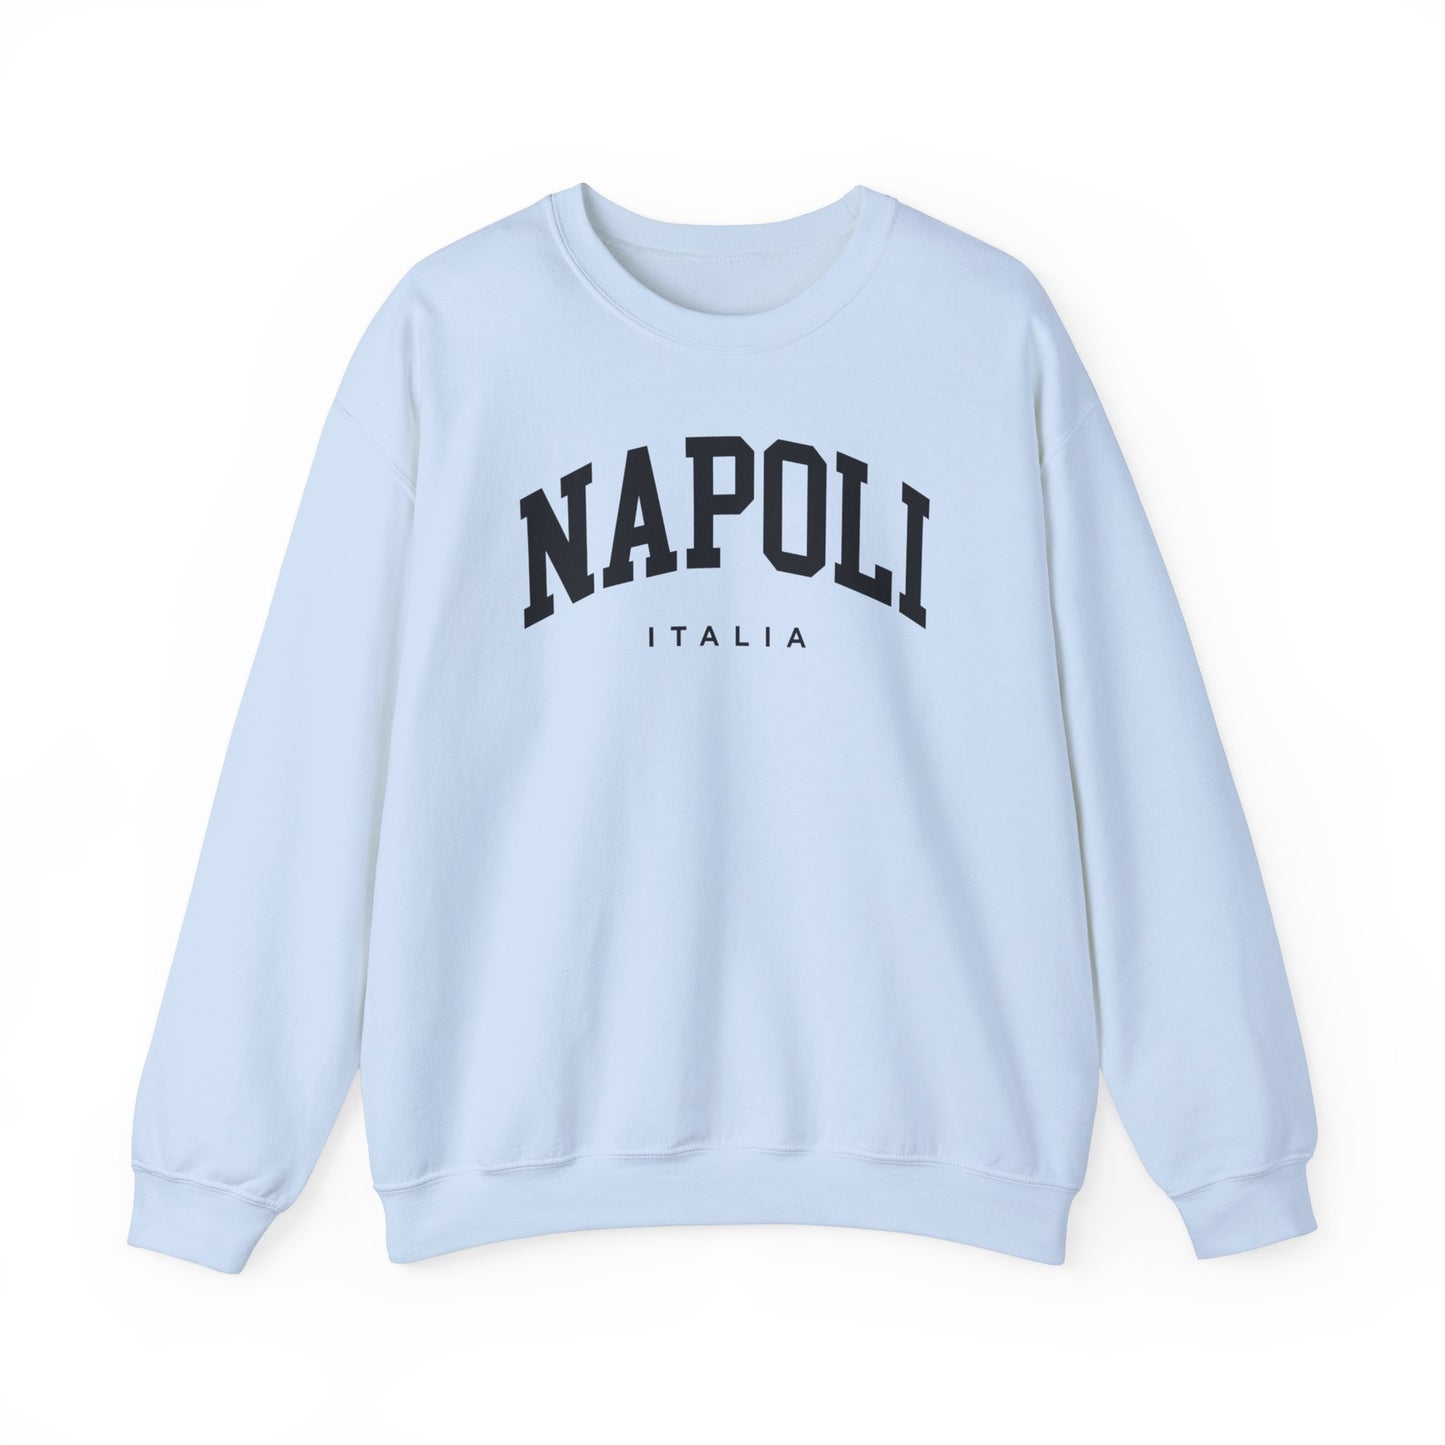 Naples Italy Sweatshirt